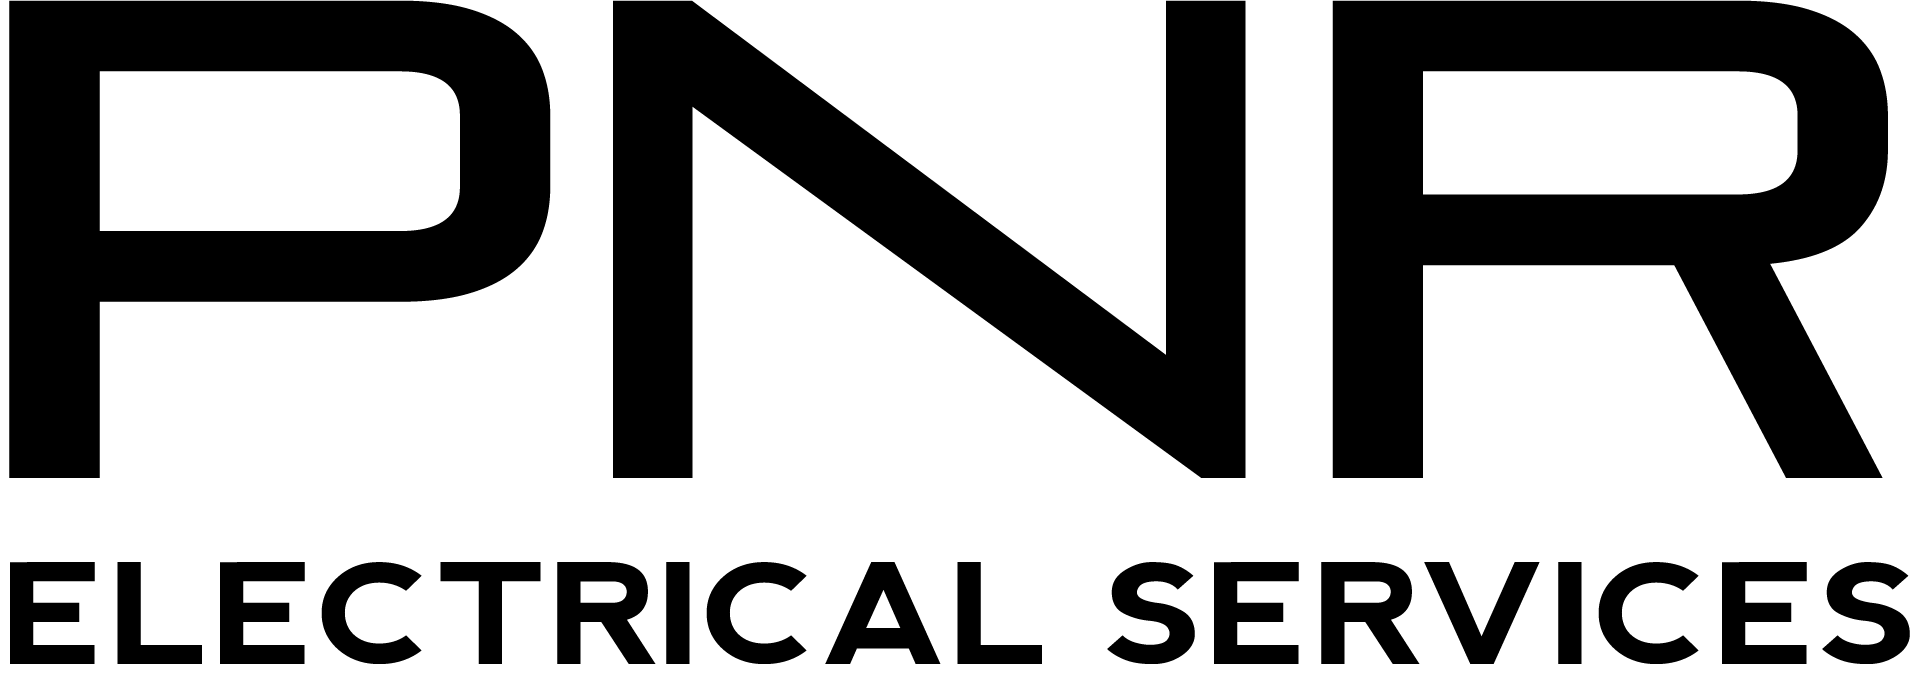 PNR-logo-black